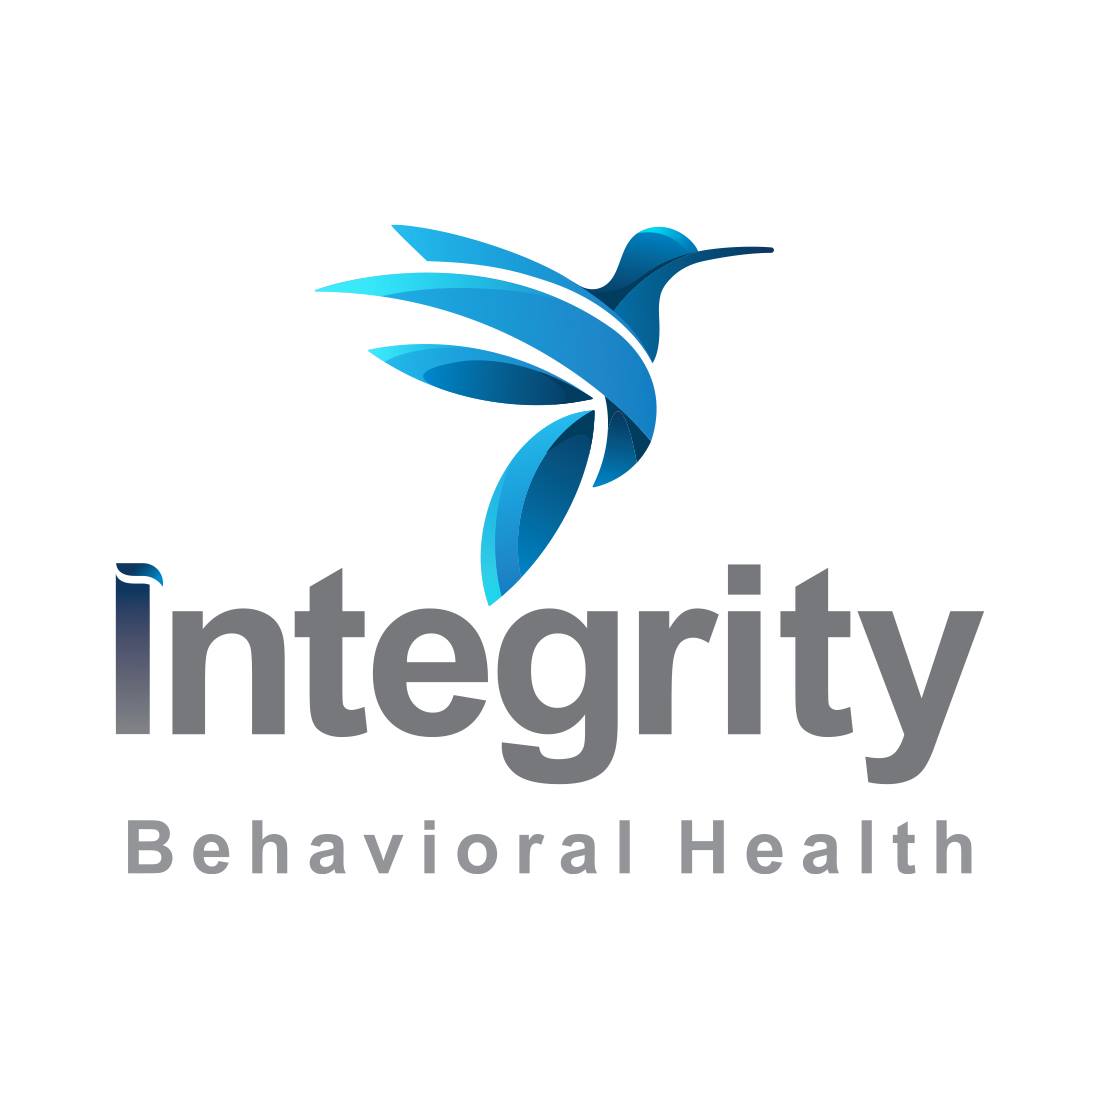 Integrity Behavioral Health 